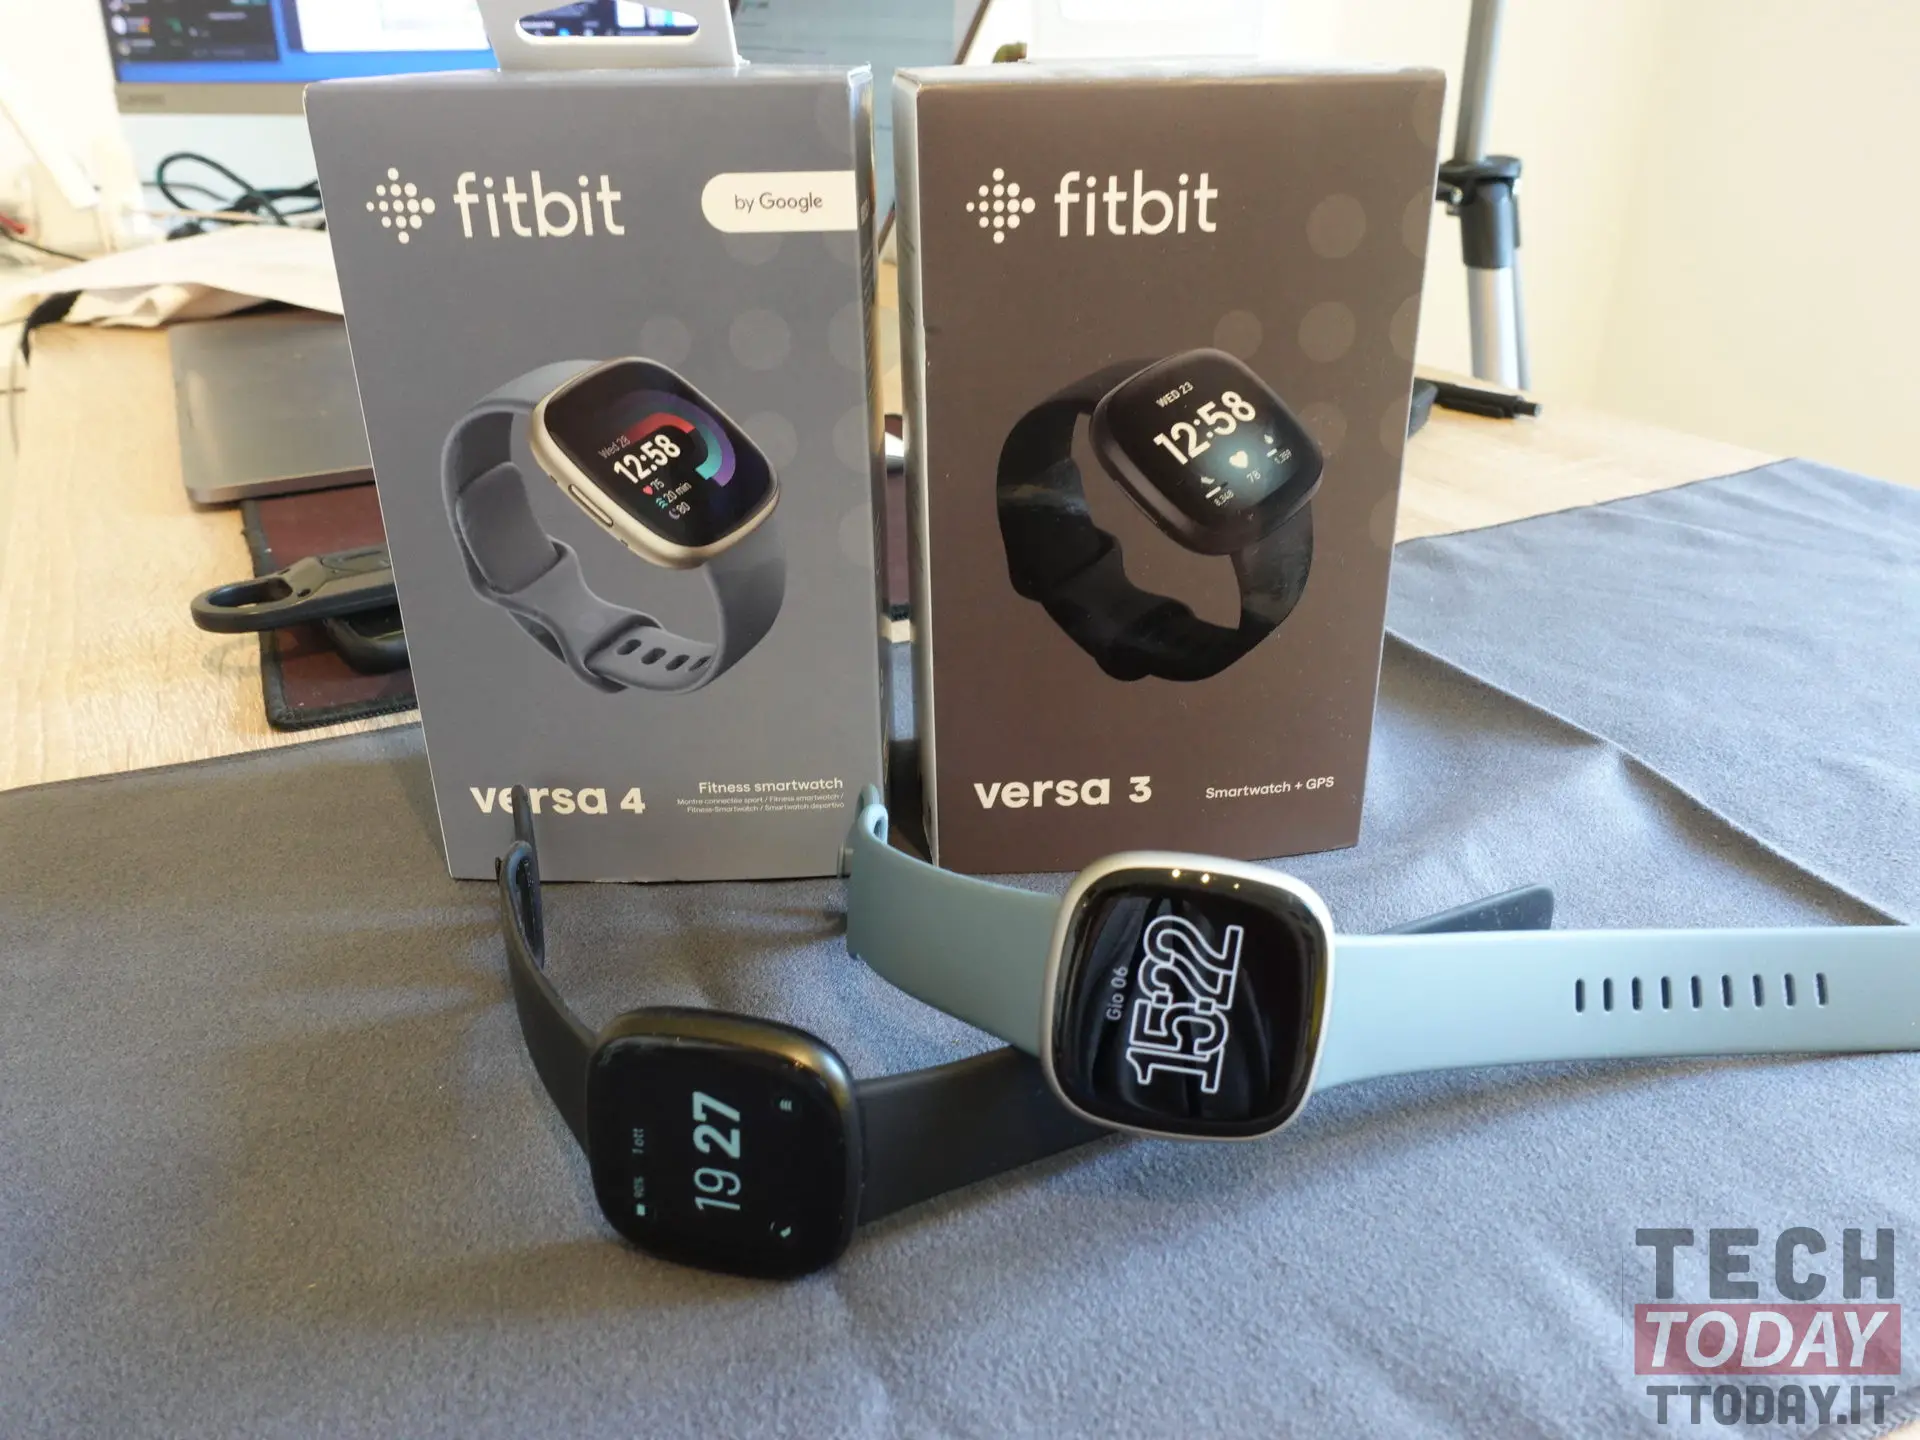 Fitbit Versa 3 vs Versa 4